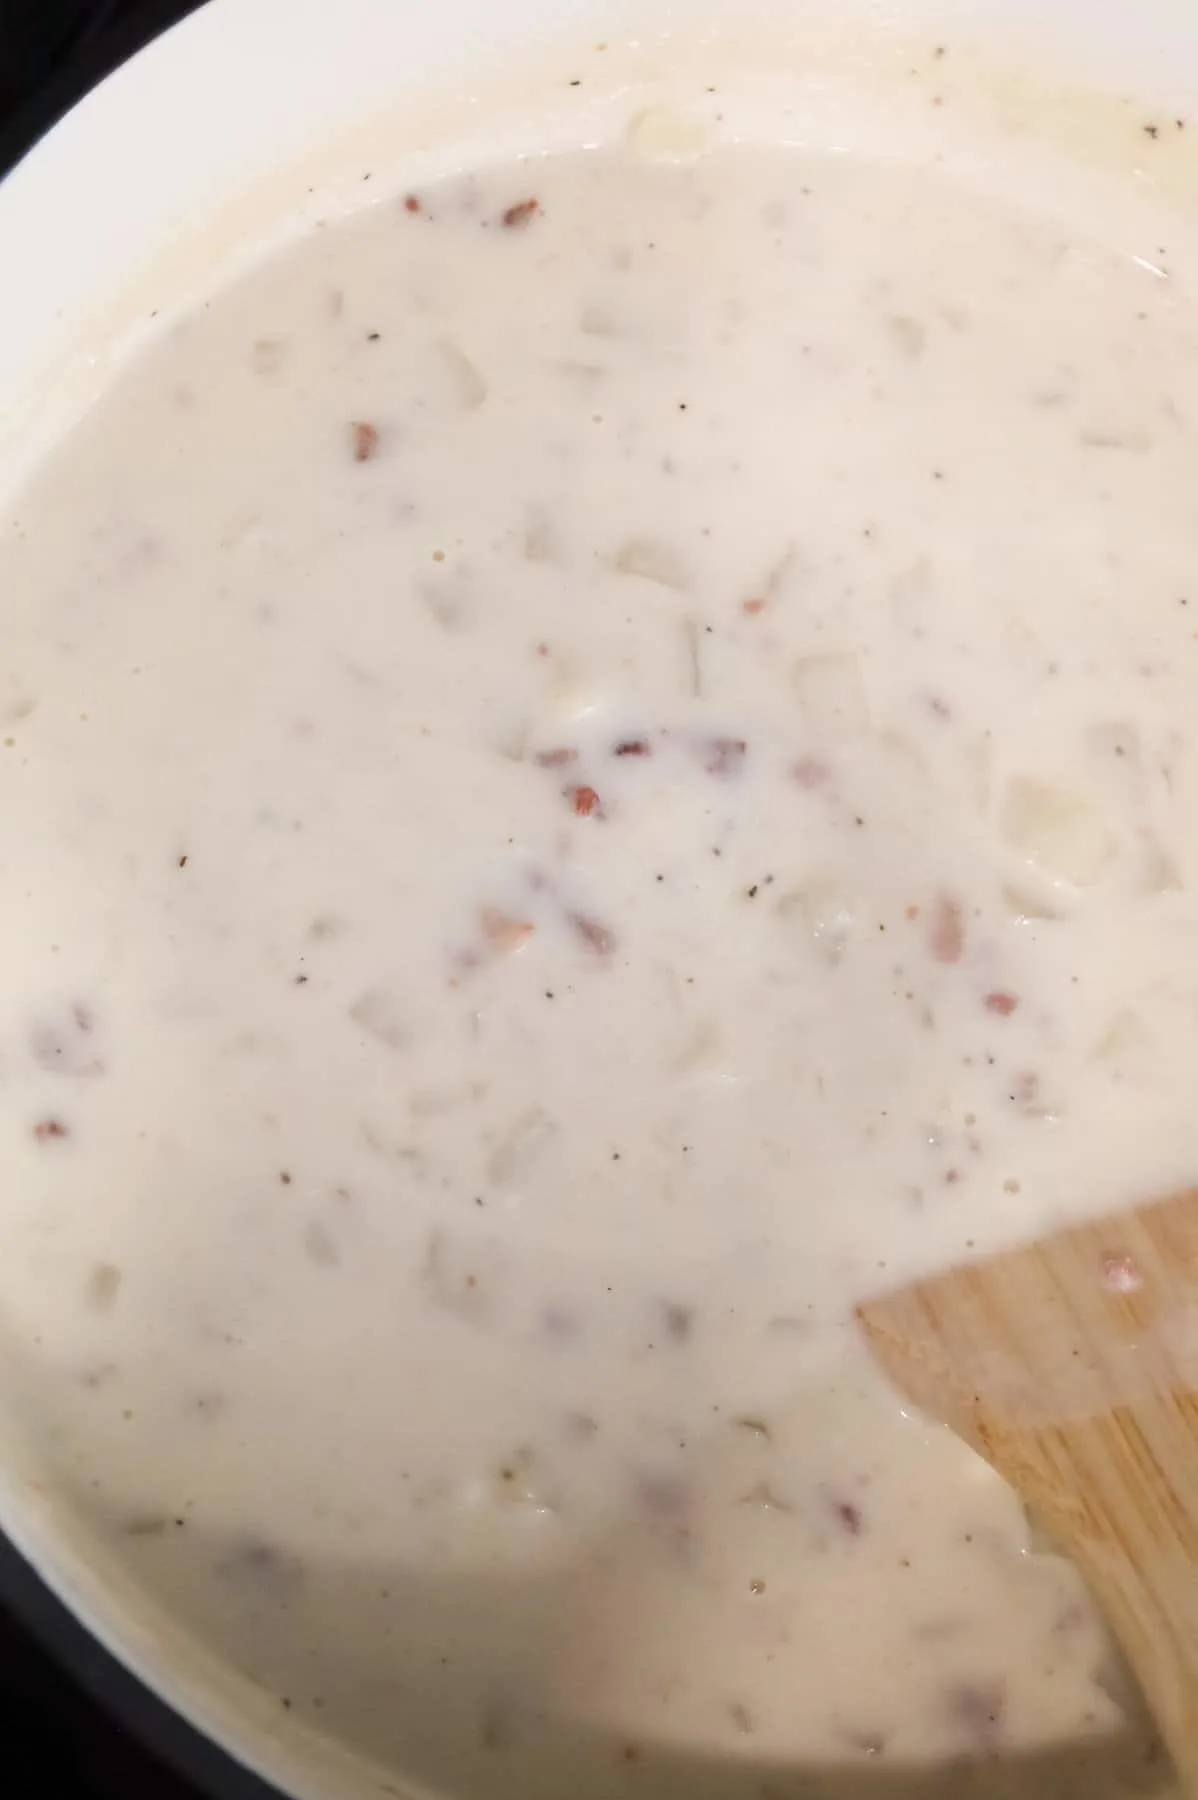 sour cream being stirred into potato soup